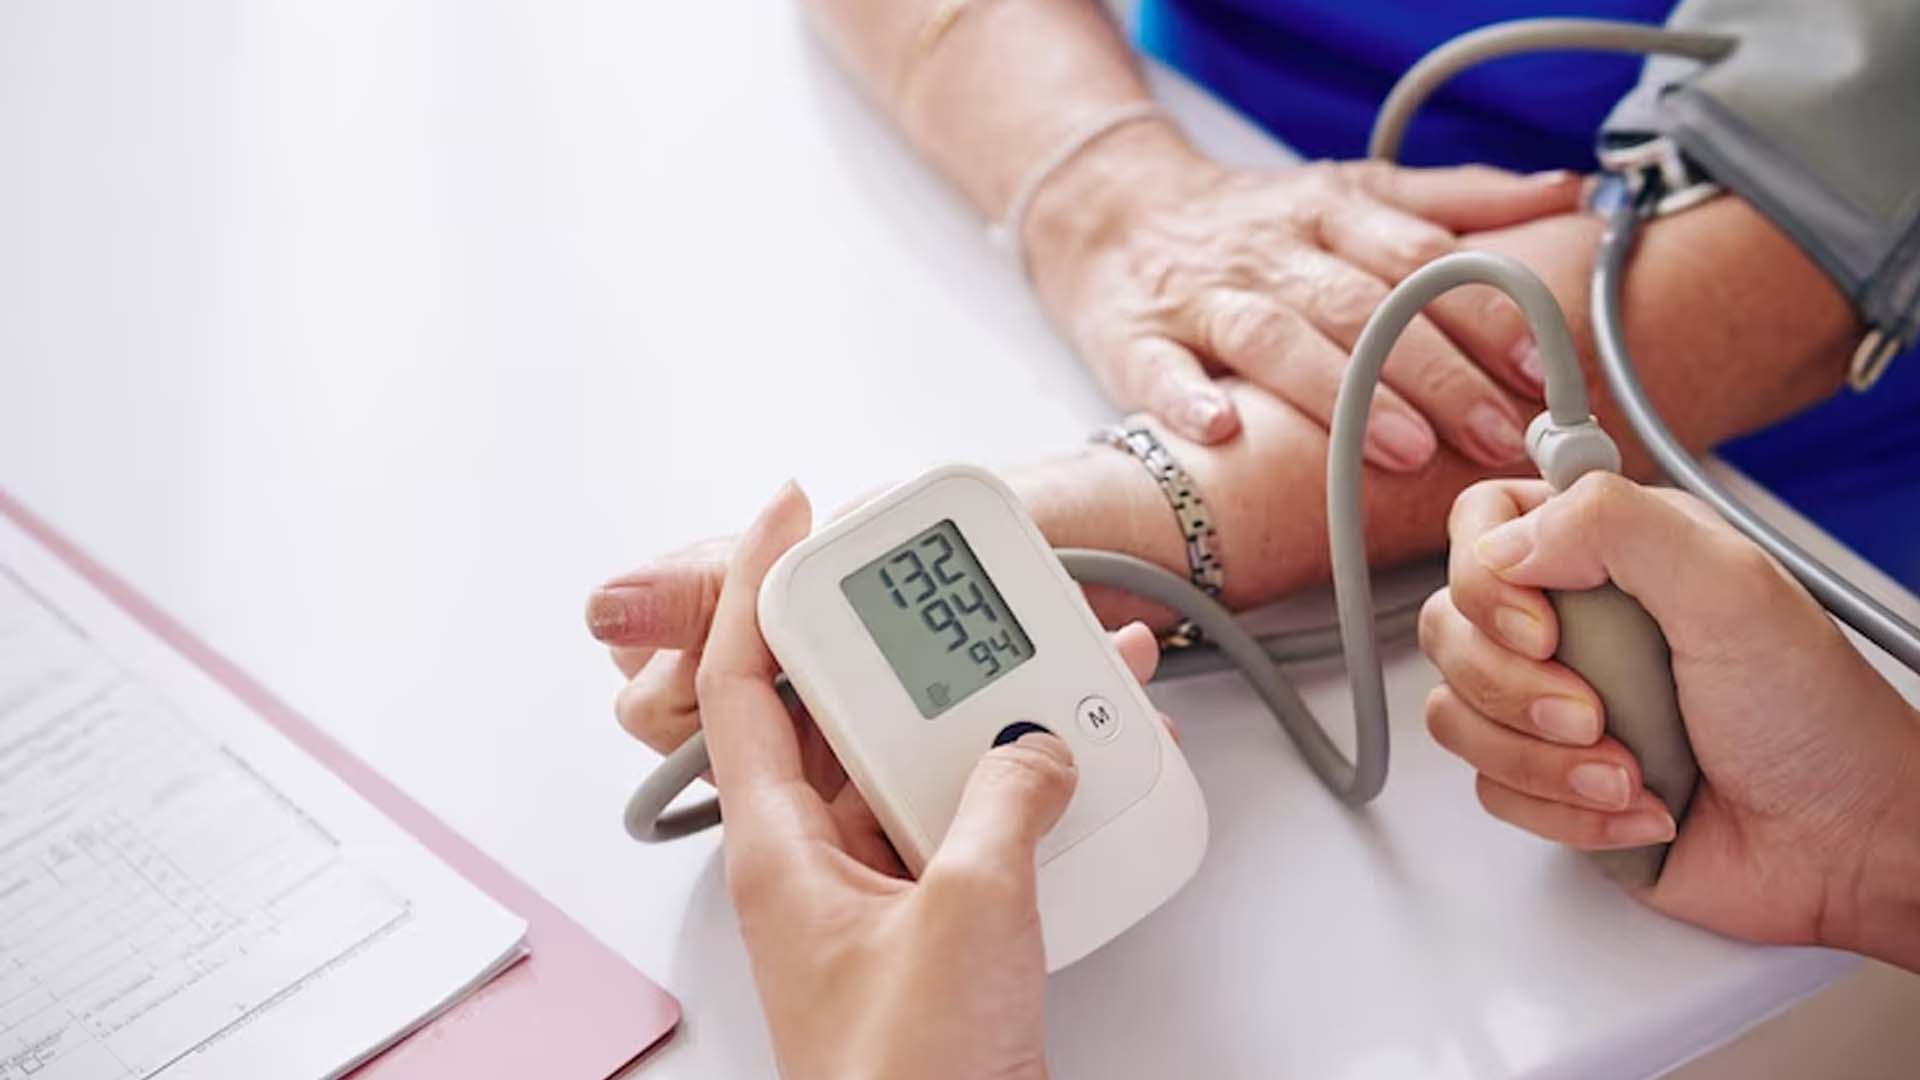 Checking Blood Pressure